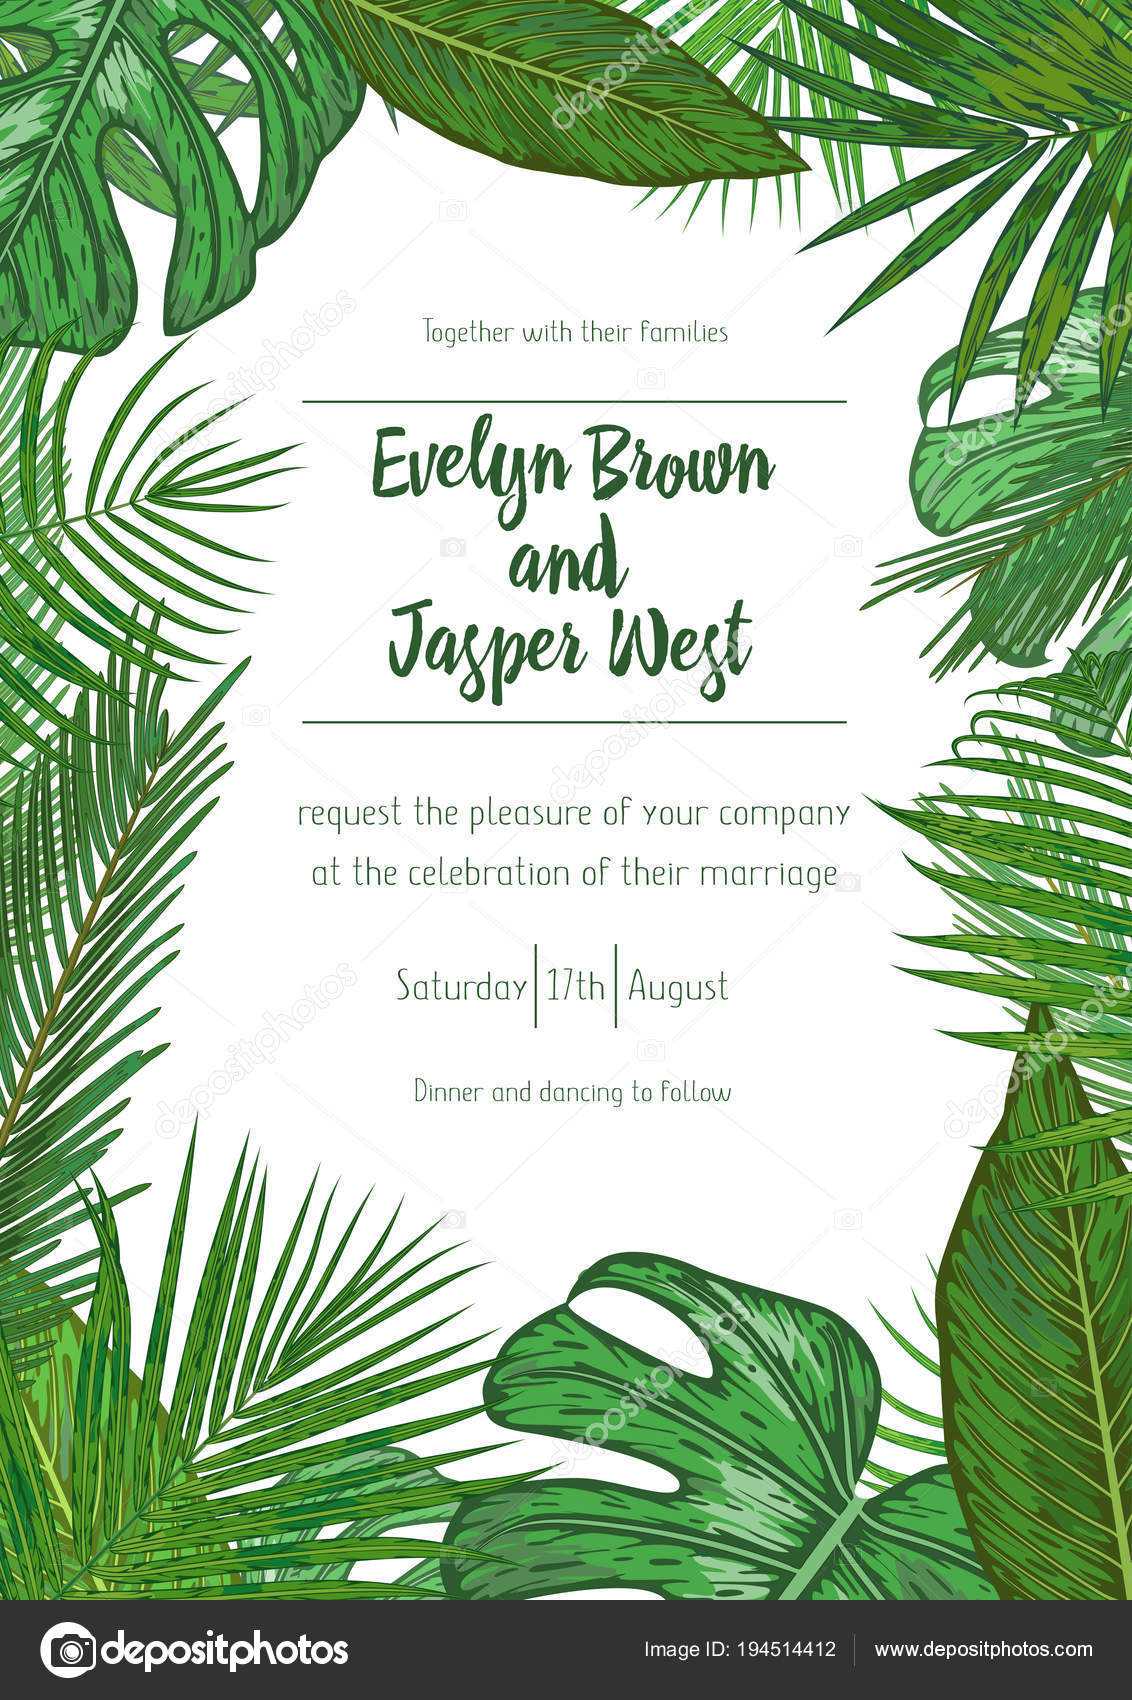 Rainforest Tree Templates | Wedding Event Invitation Card Regarding Event Invitation Card Template